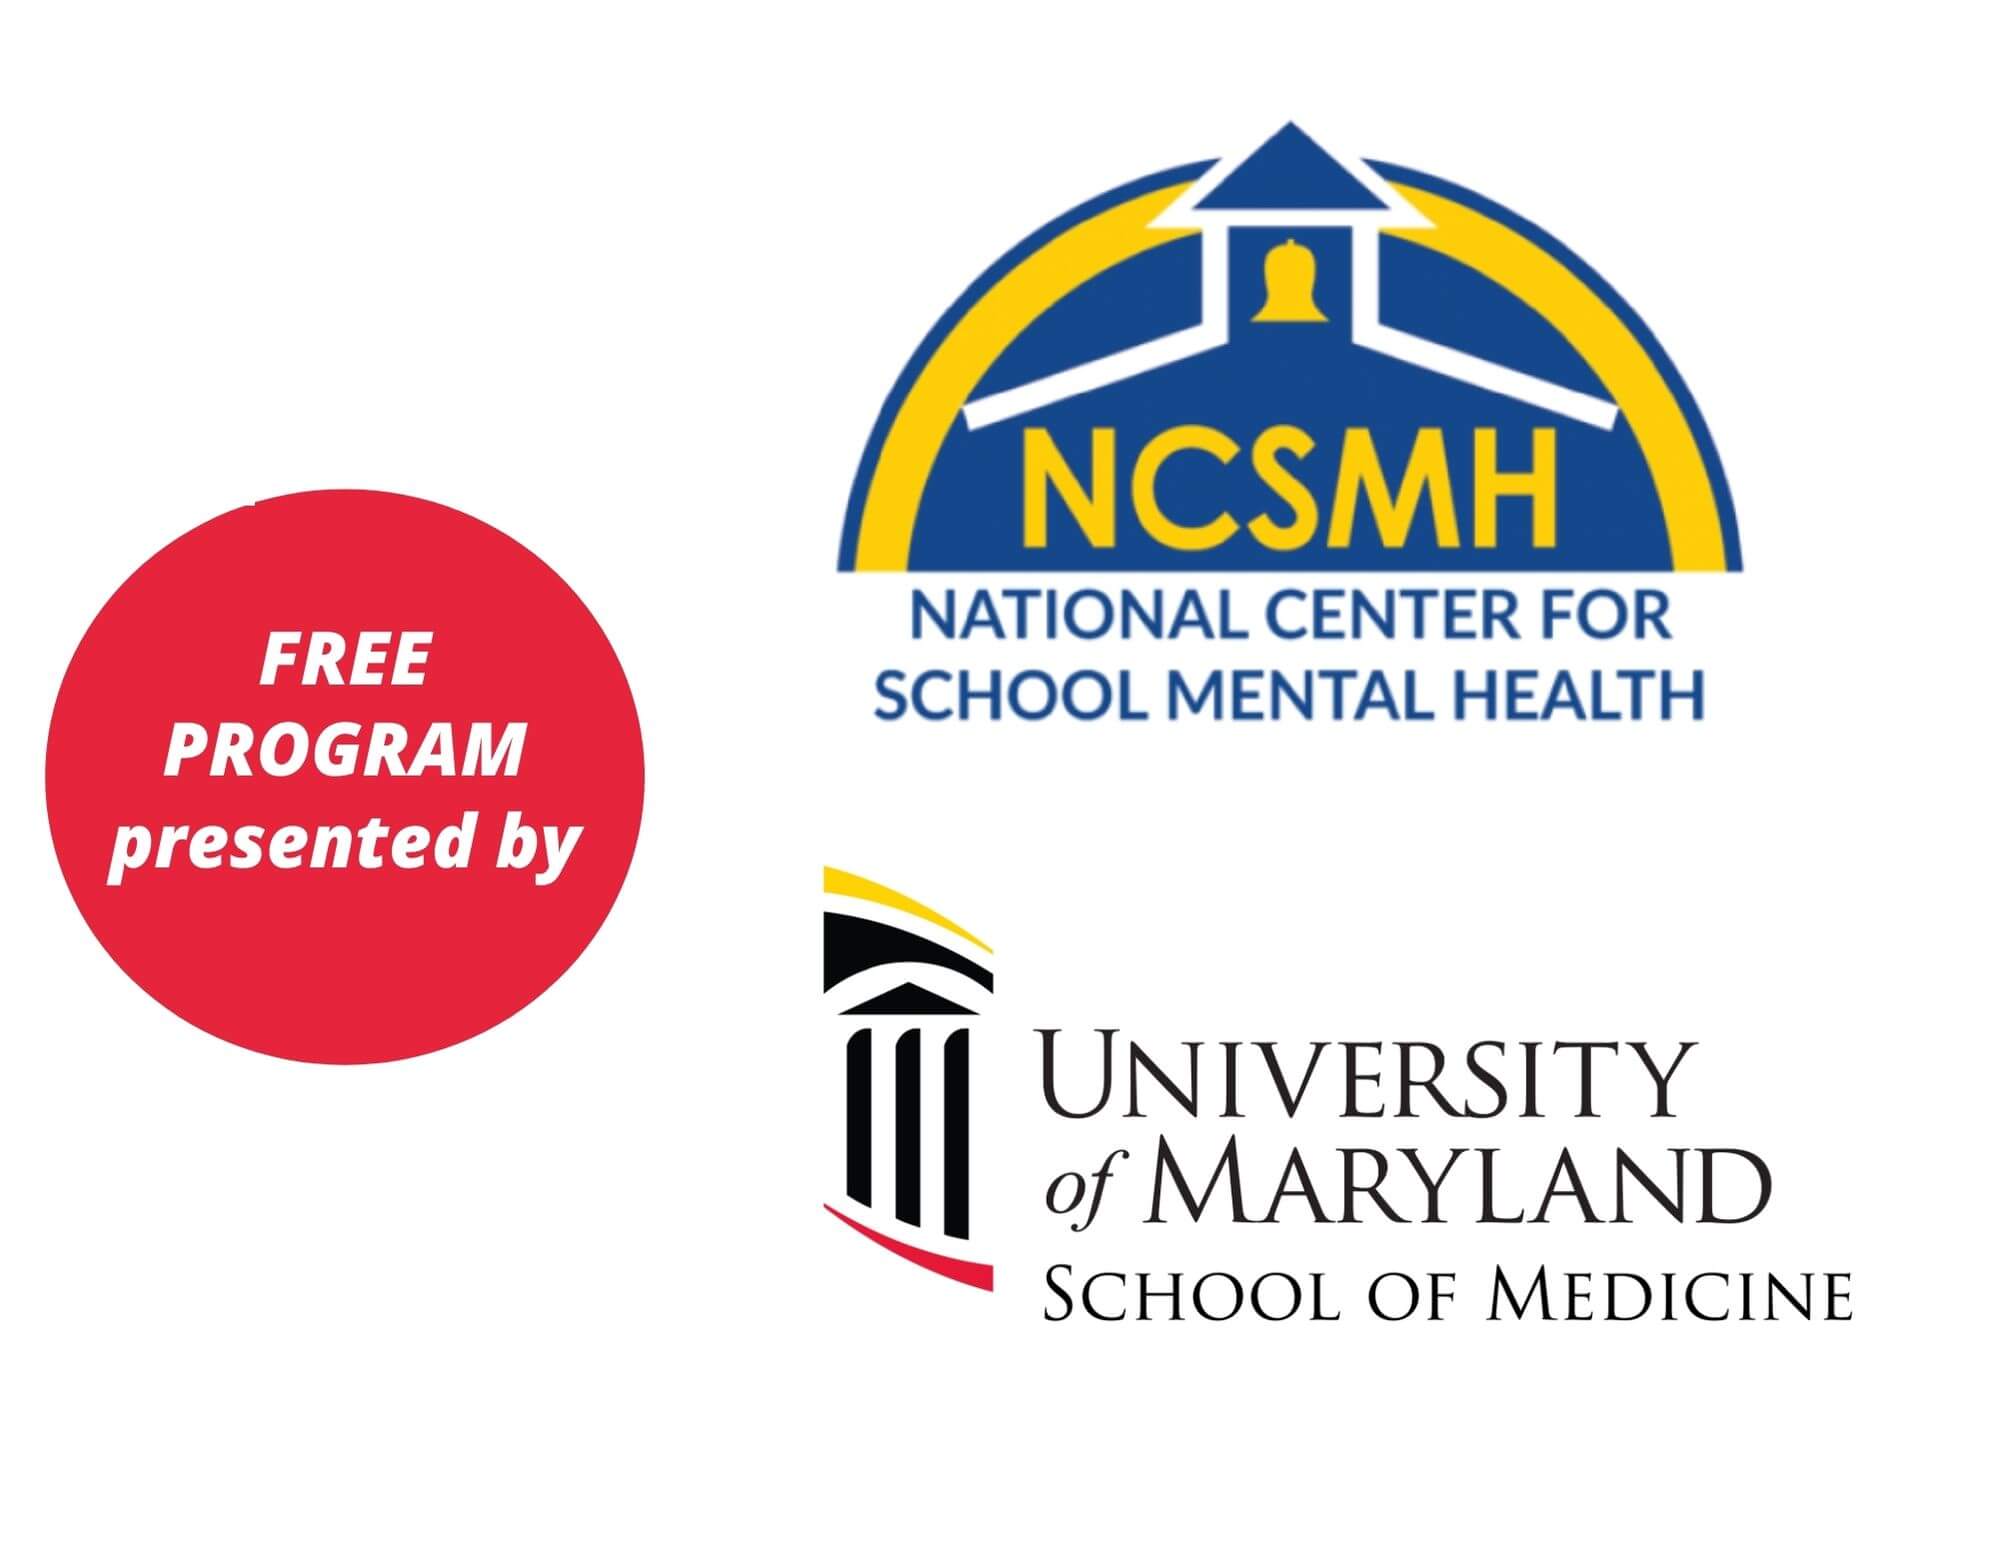 NCSMH and U of MD school of medicine logos